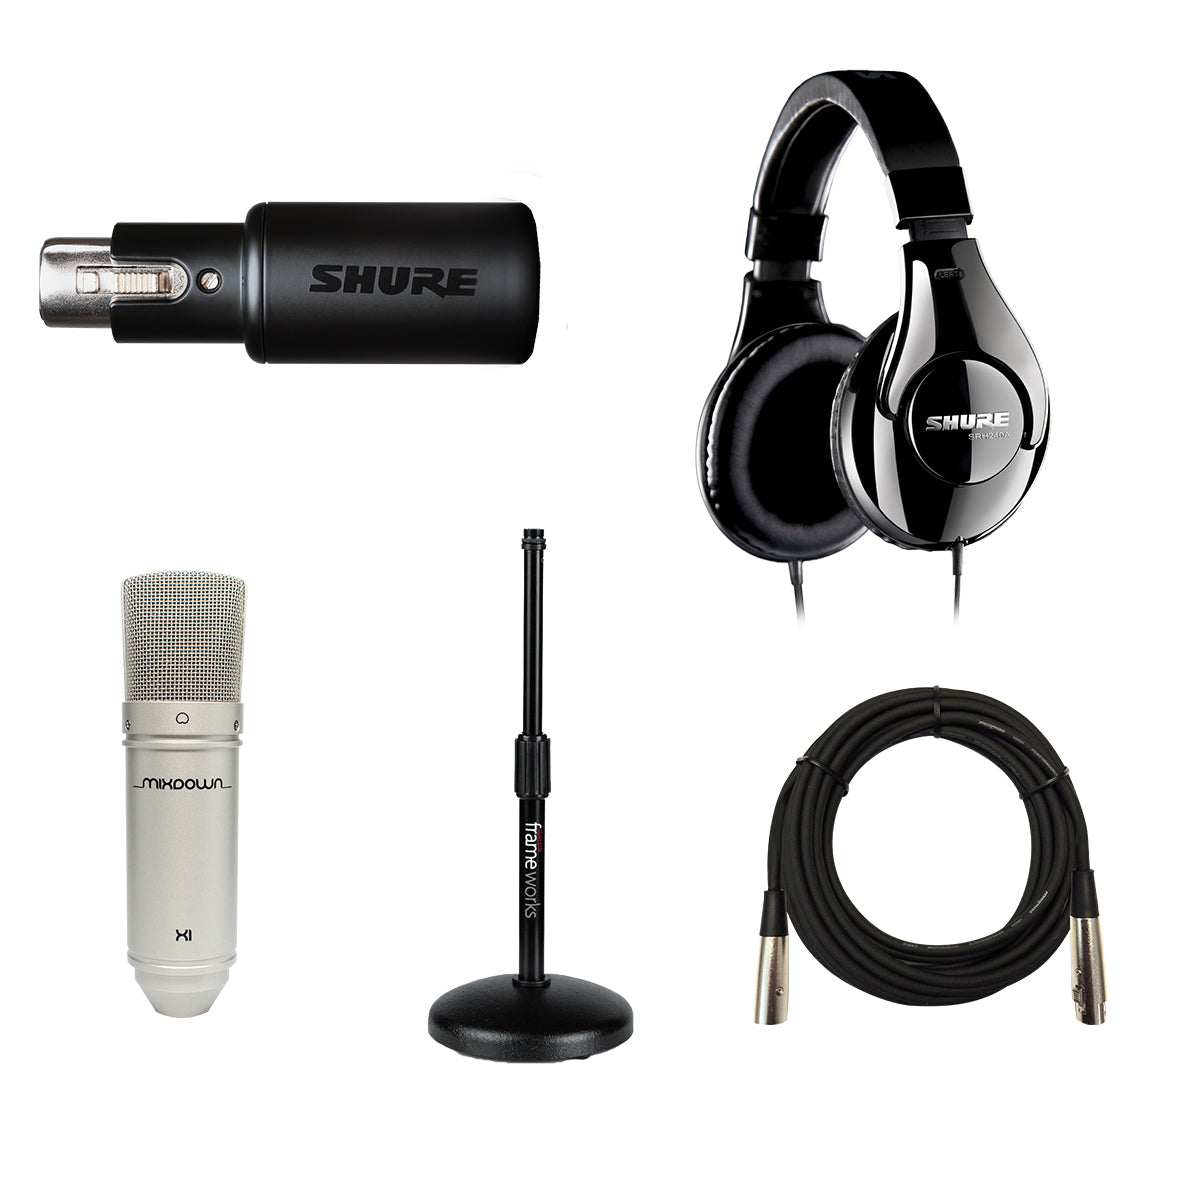 Shure MVX2U Digital Audio Interface STUDIO KIT